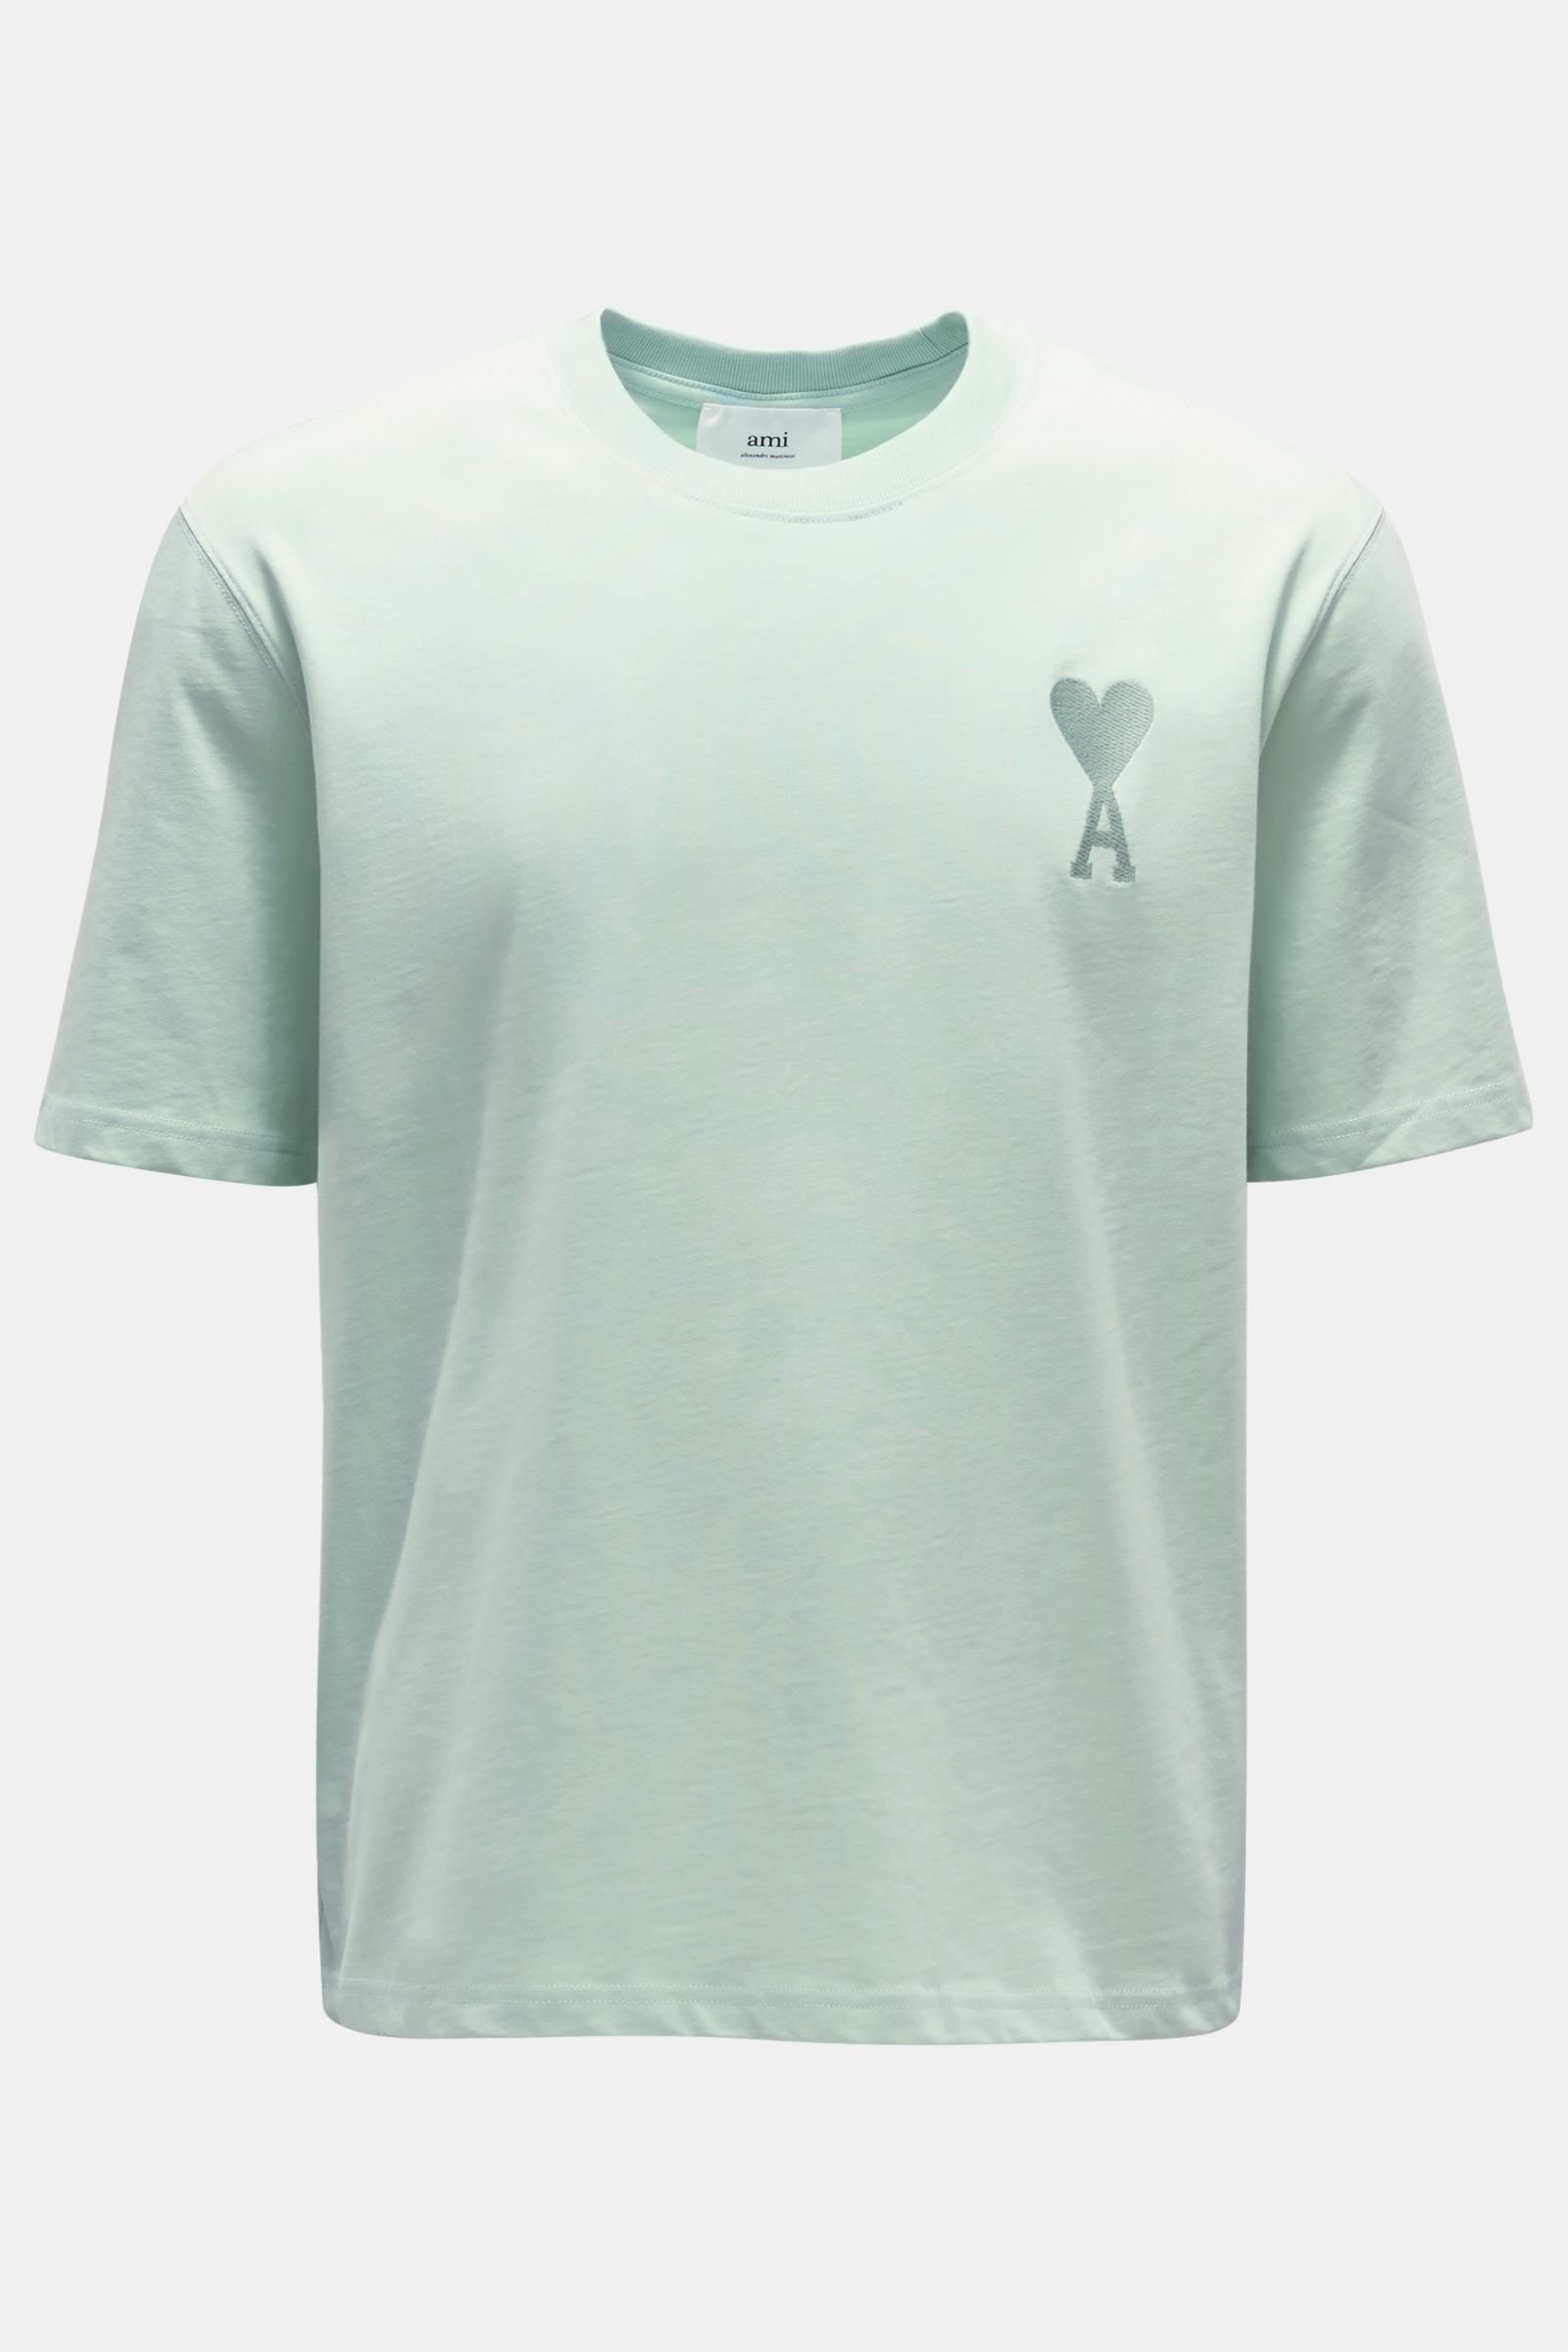 Rundhals-T-Shirt mintgrün